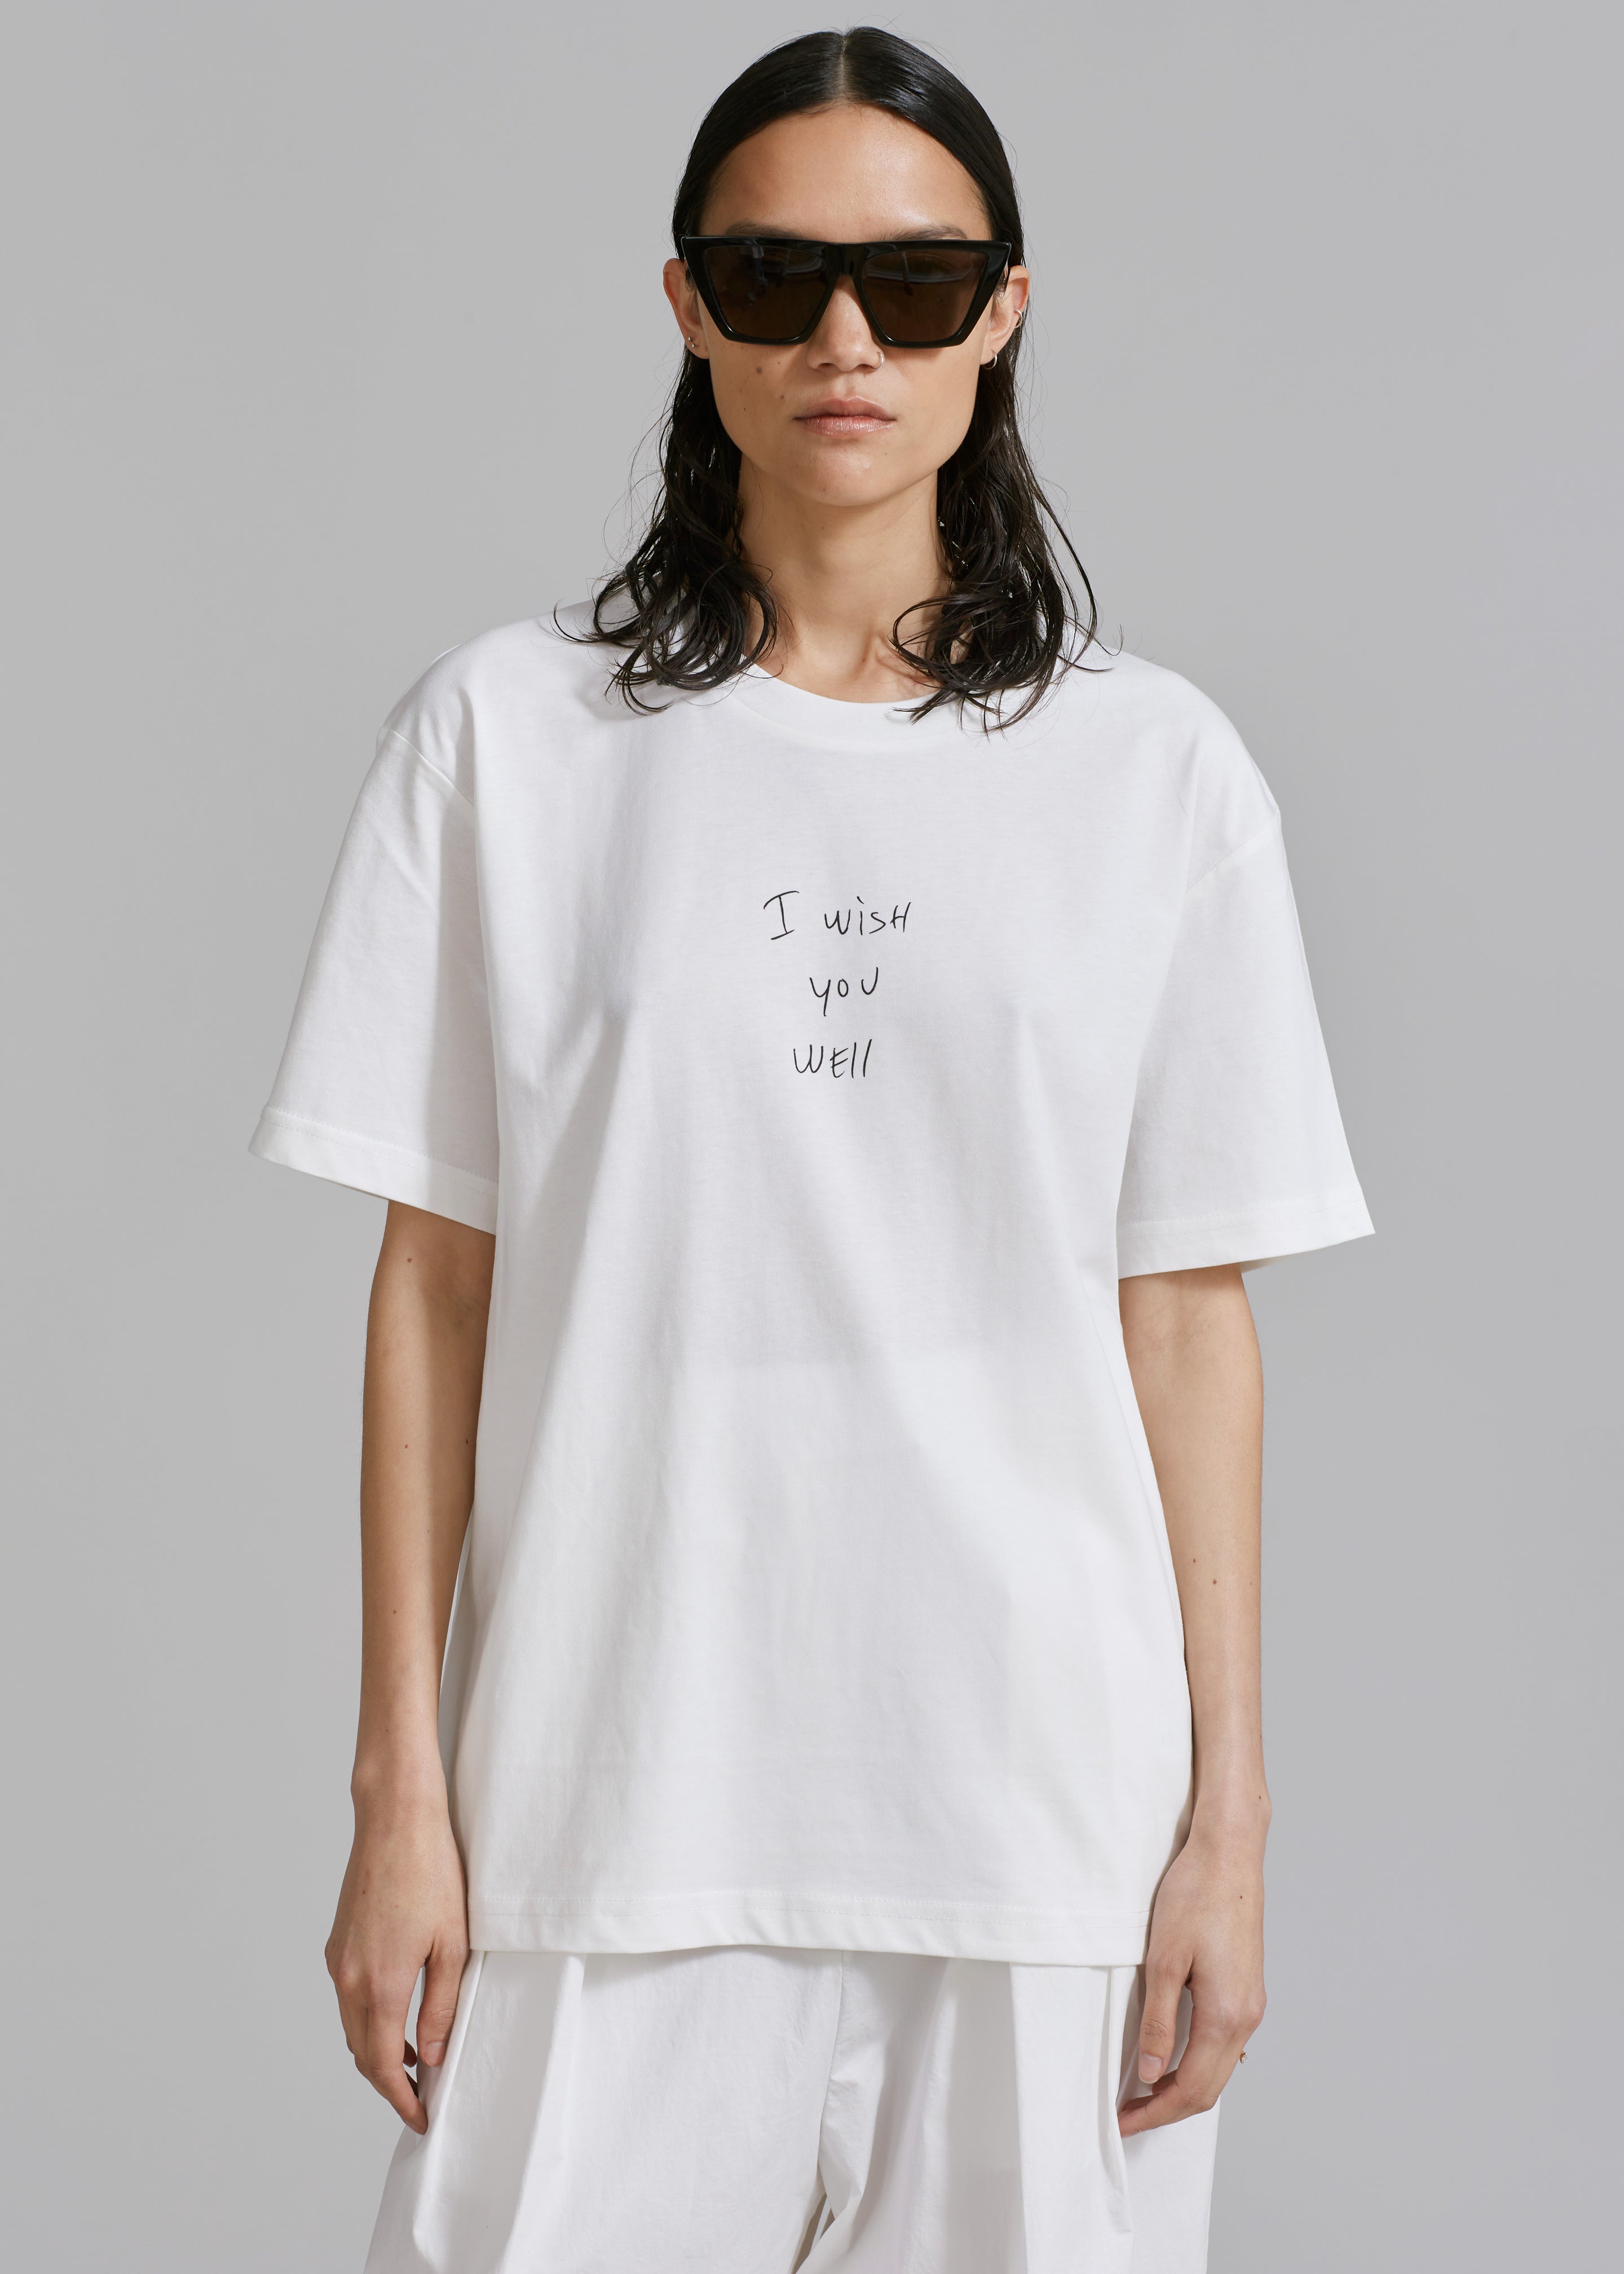 The Frankie Shop x Thomas Lélu Slope T-Shirt - Off White/Black - 7